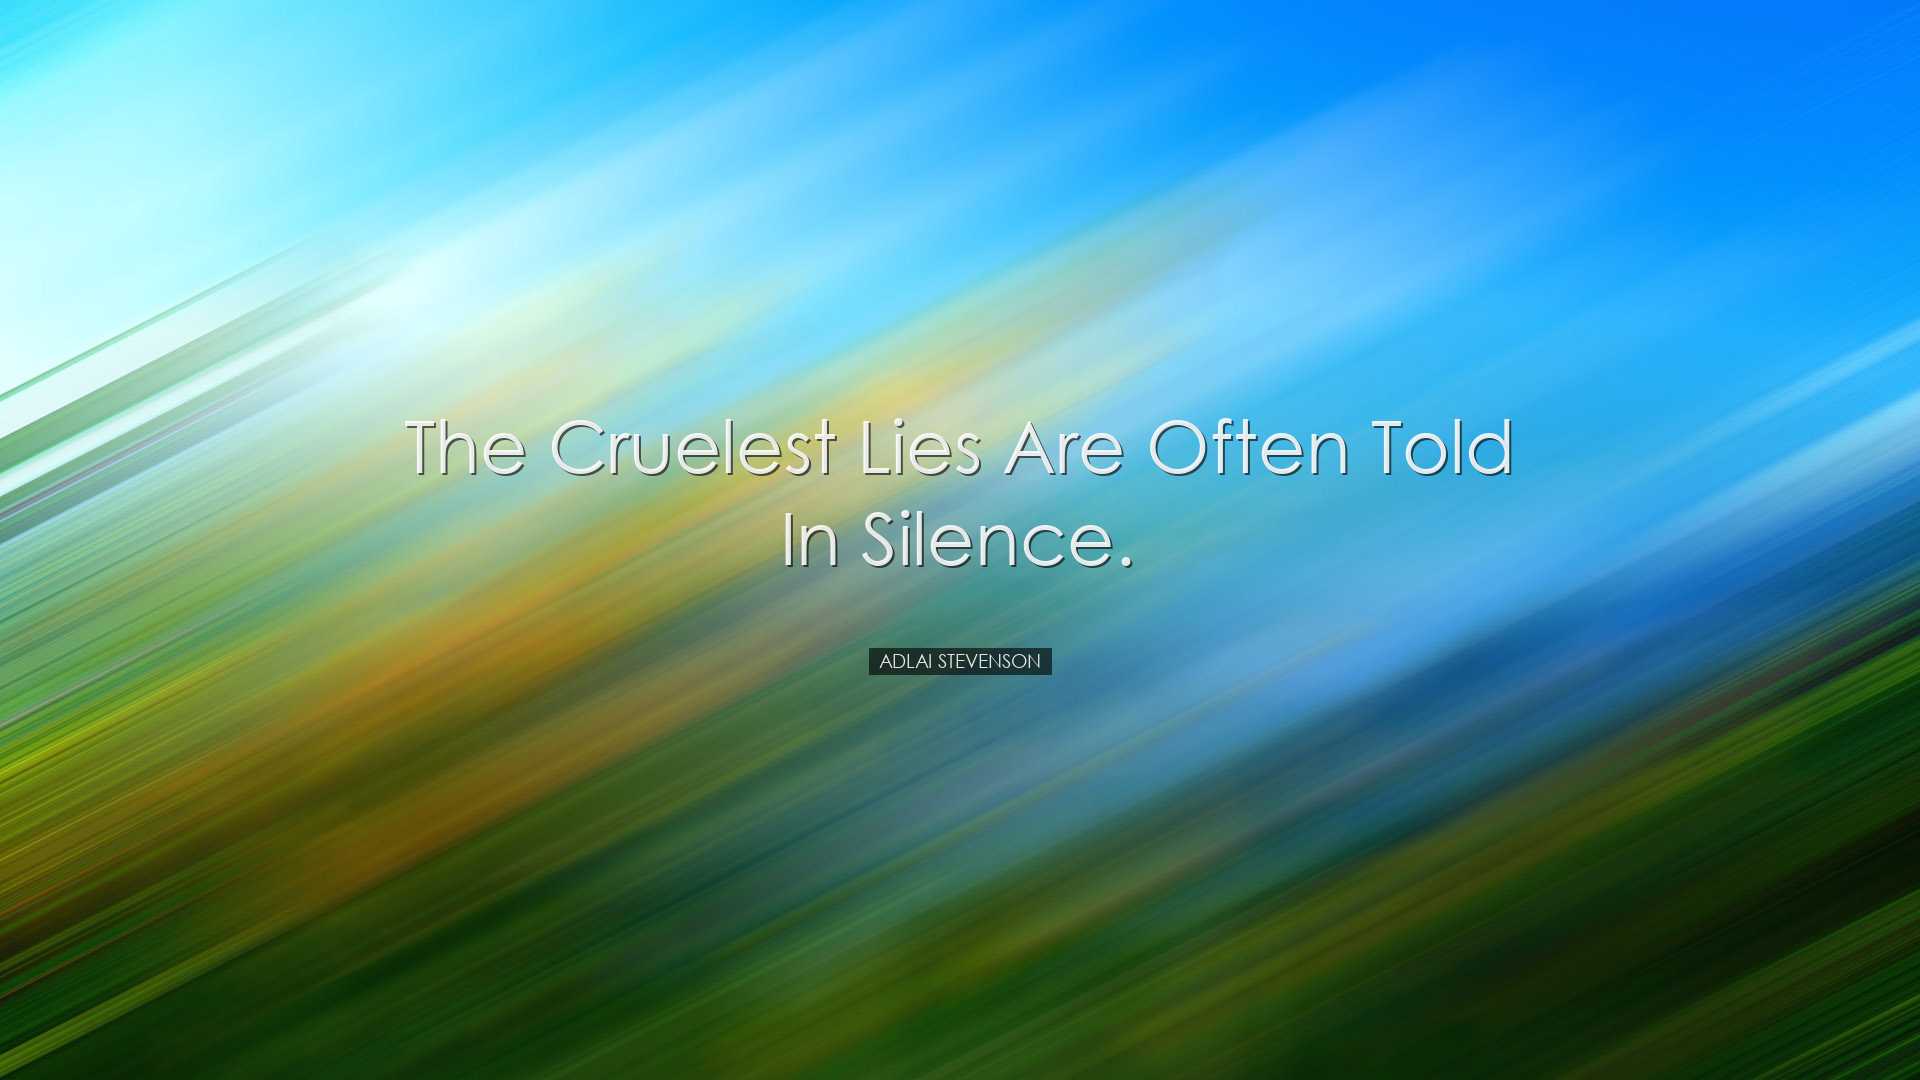 The cruelest lies are often told in silence. - Adlai Stevenson